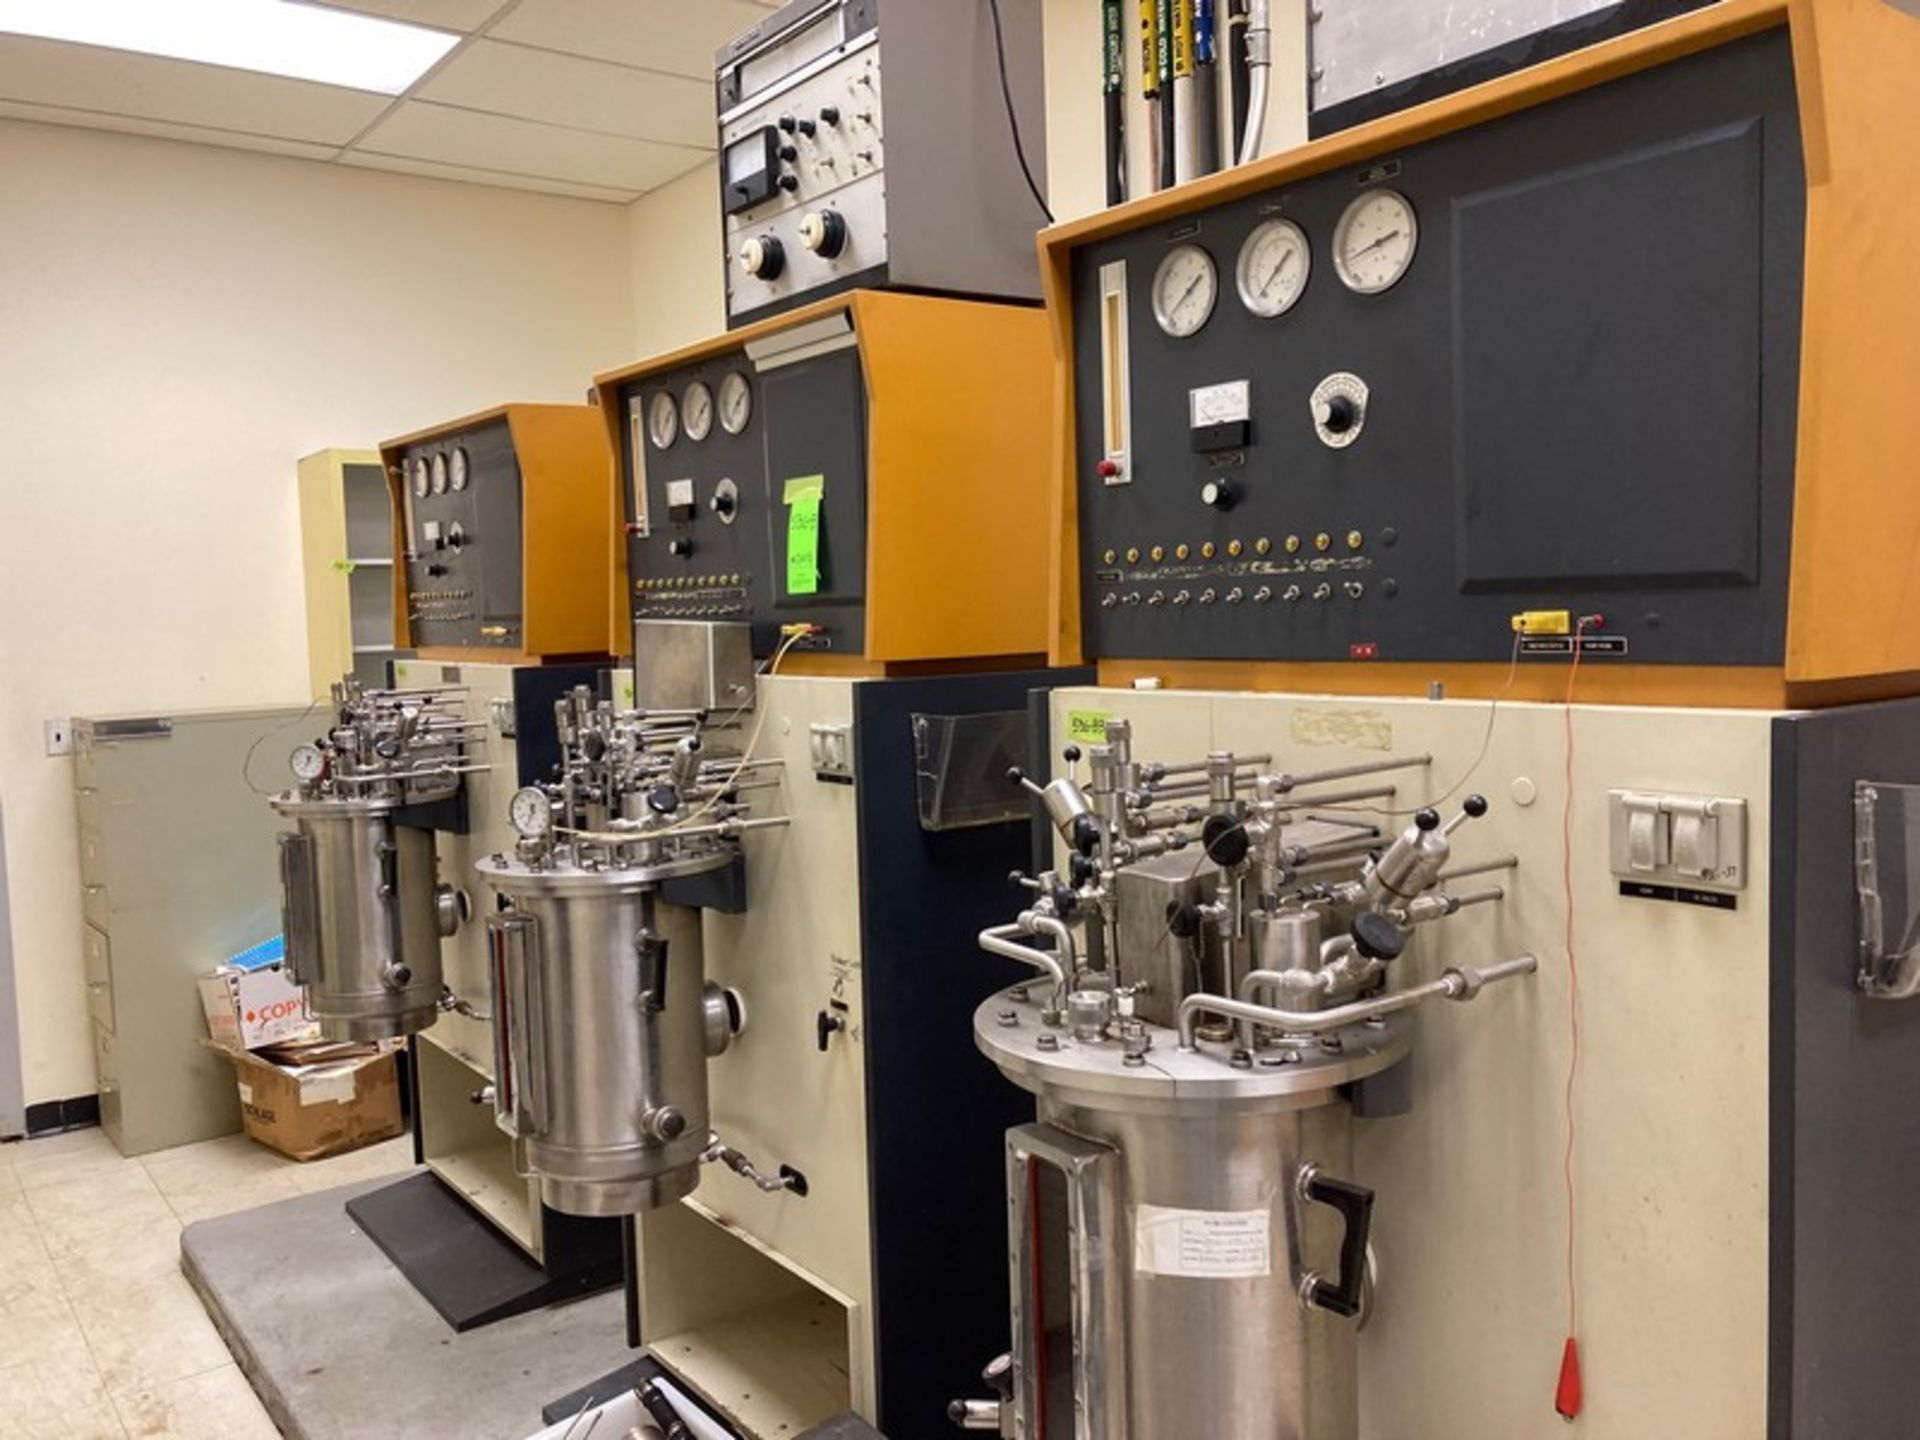 3 units - MicroFerm Firmentor - New Brunswick Scientific Co., Inc, Model #MF 1285, 115V, Phase 1 - Image 6 of 7